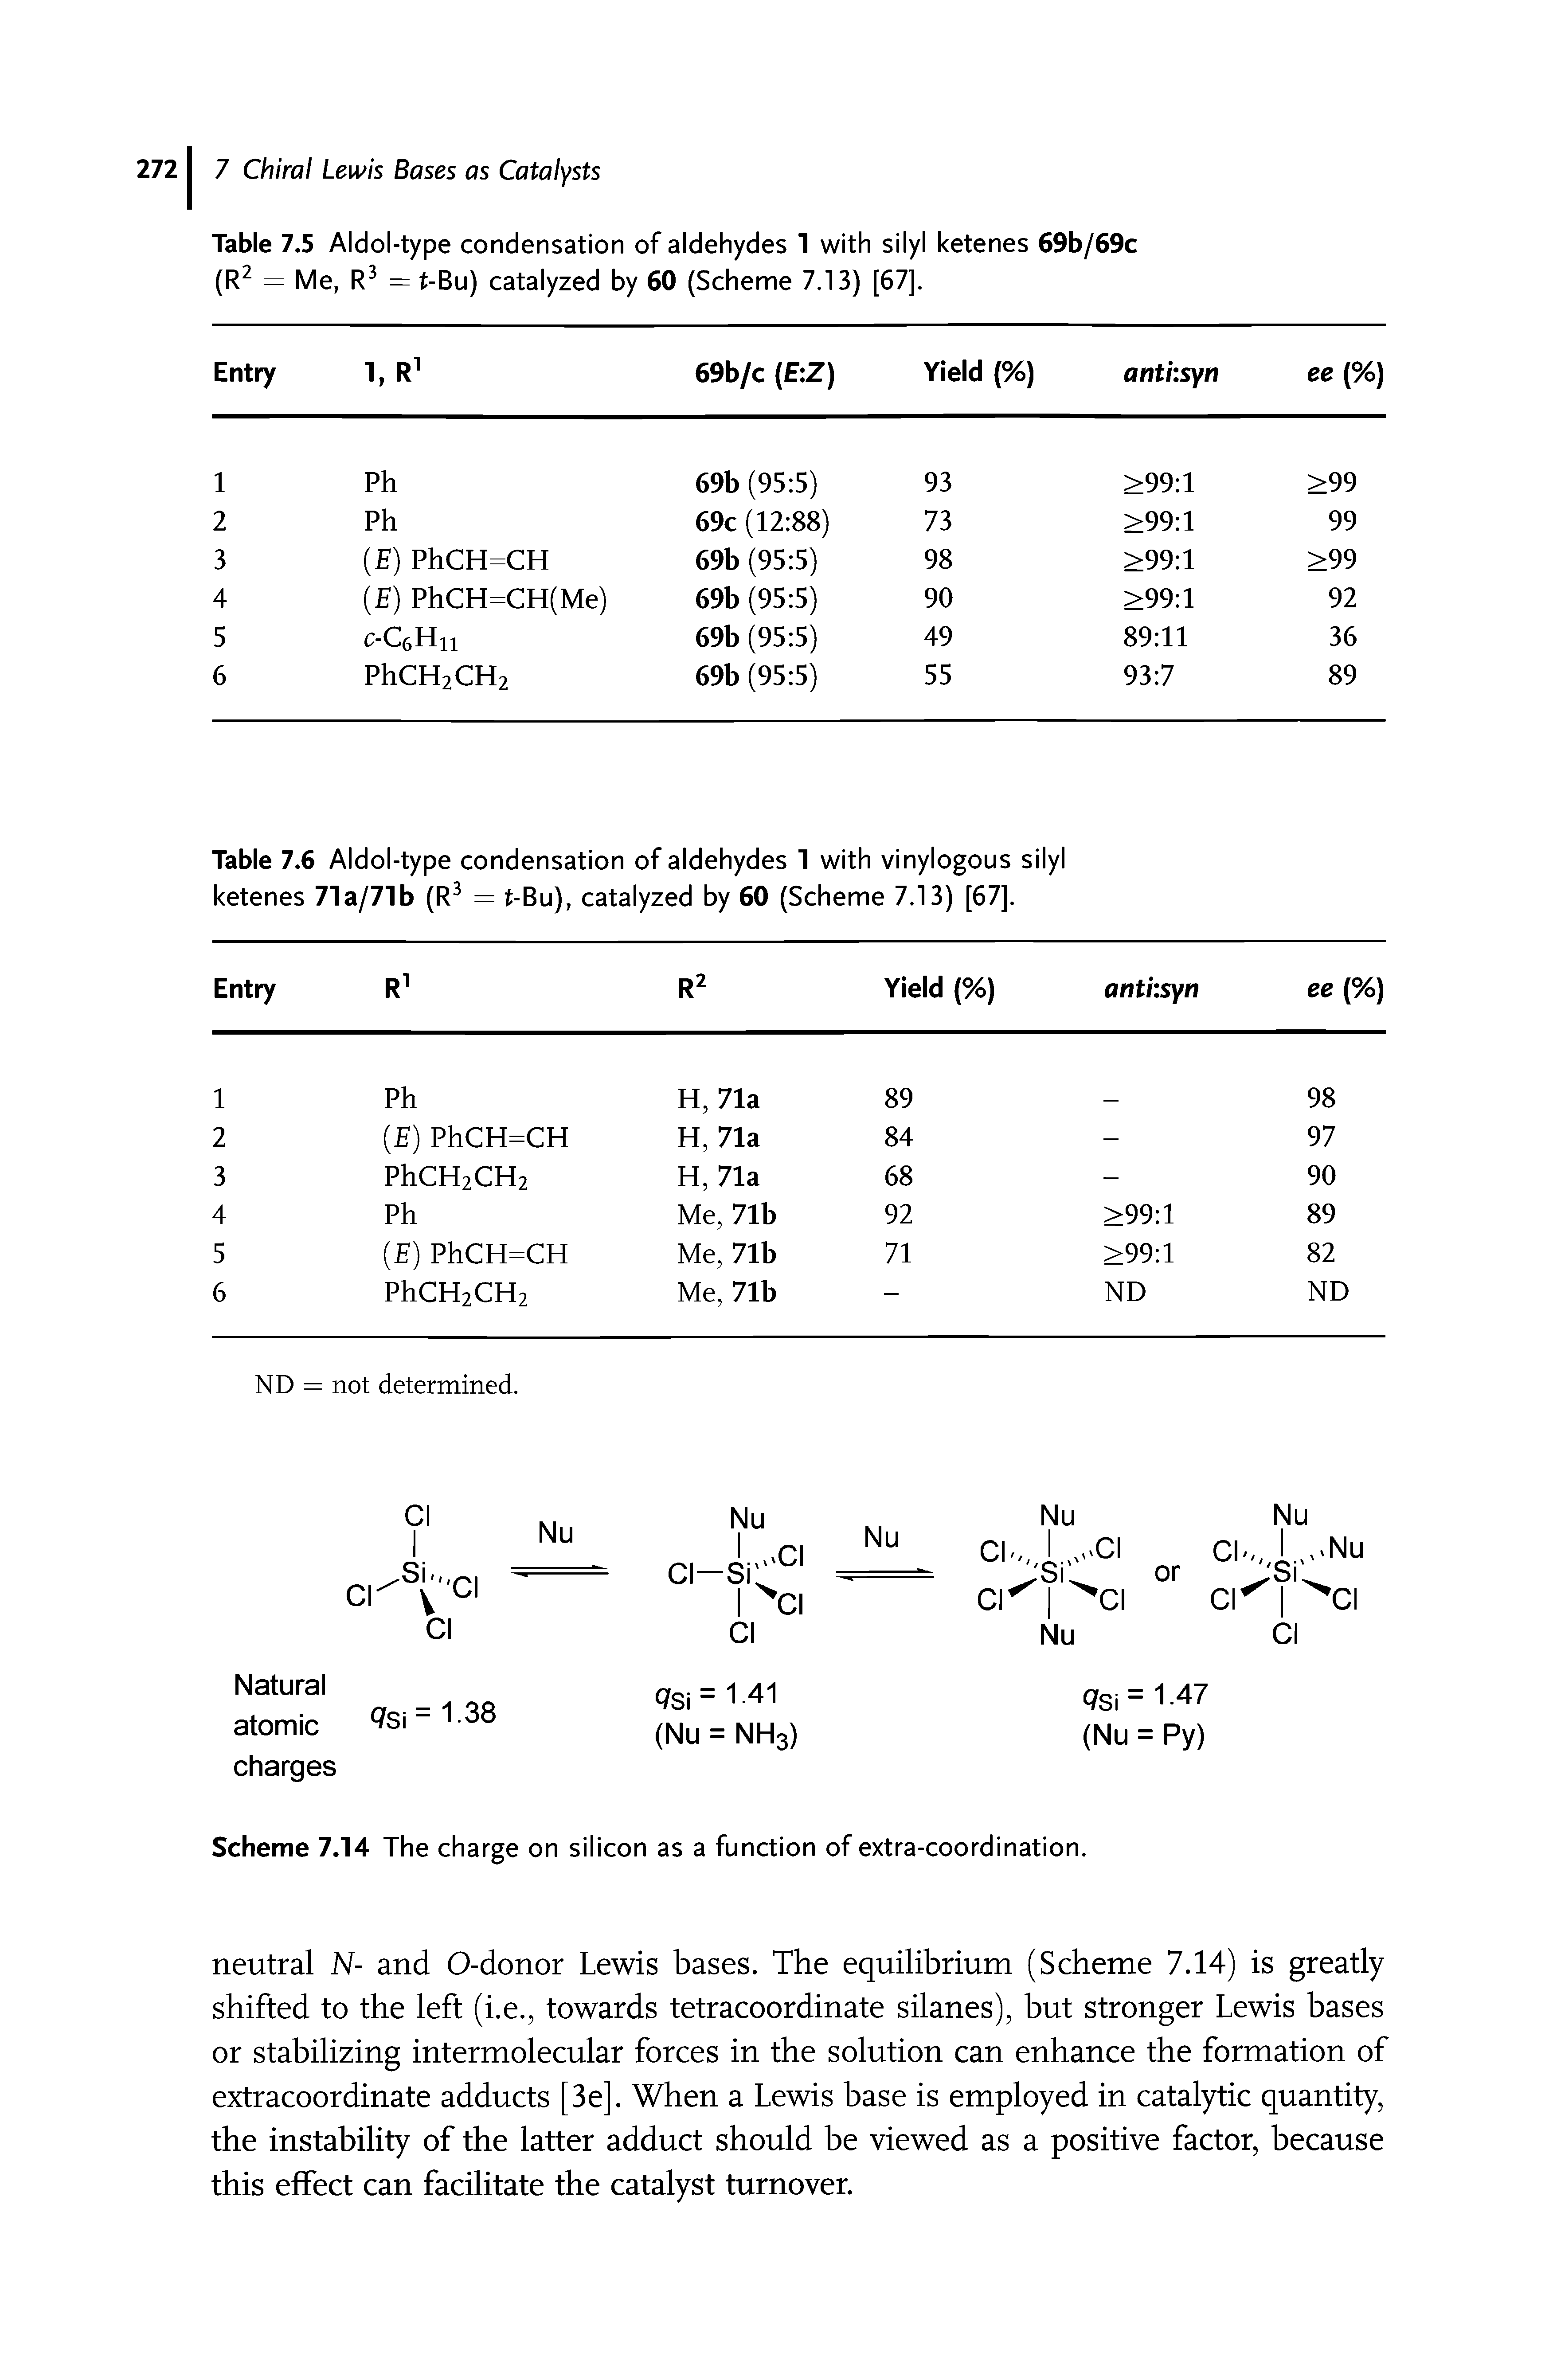 Table 7.6 Aldol-type condensation of aldehydes 1 with vinylogous silyl ketenes 71a/71b (R3 = t-Bu), catalyzed by 60 (Scheme 7.13) [67]. ...